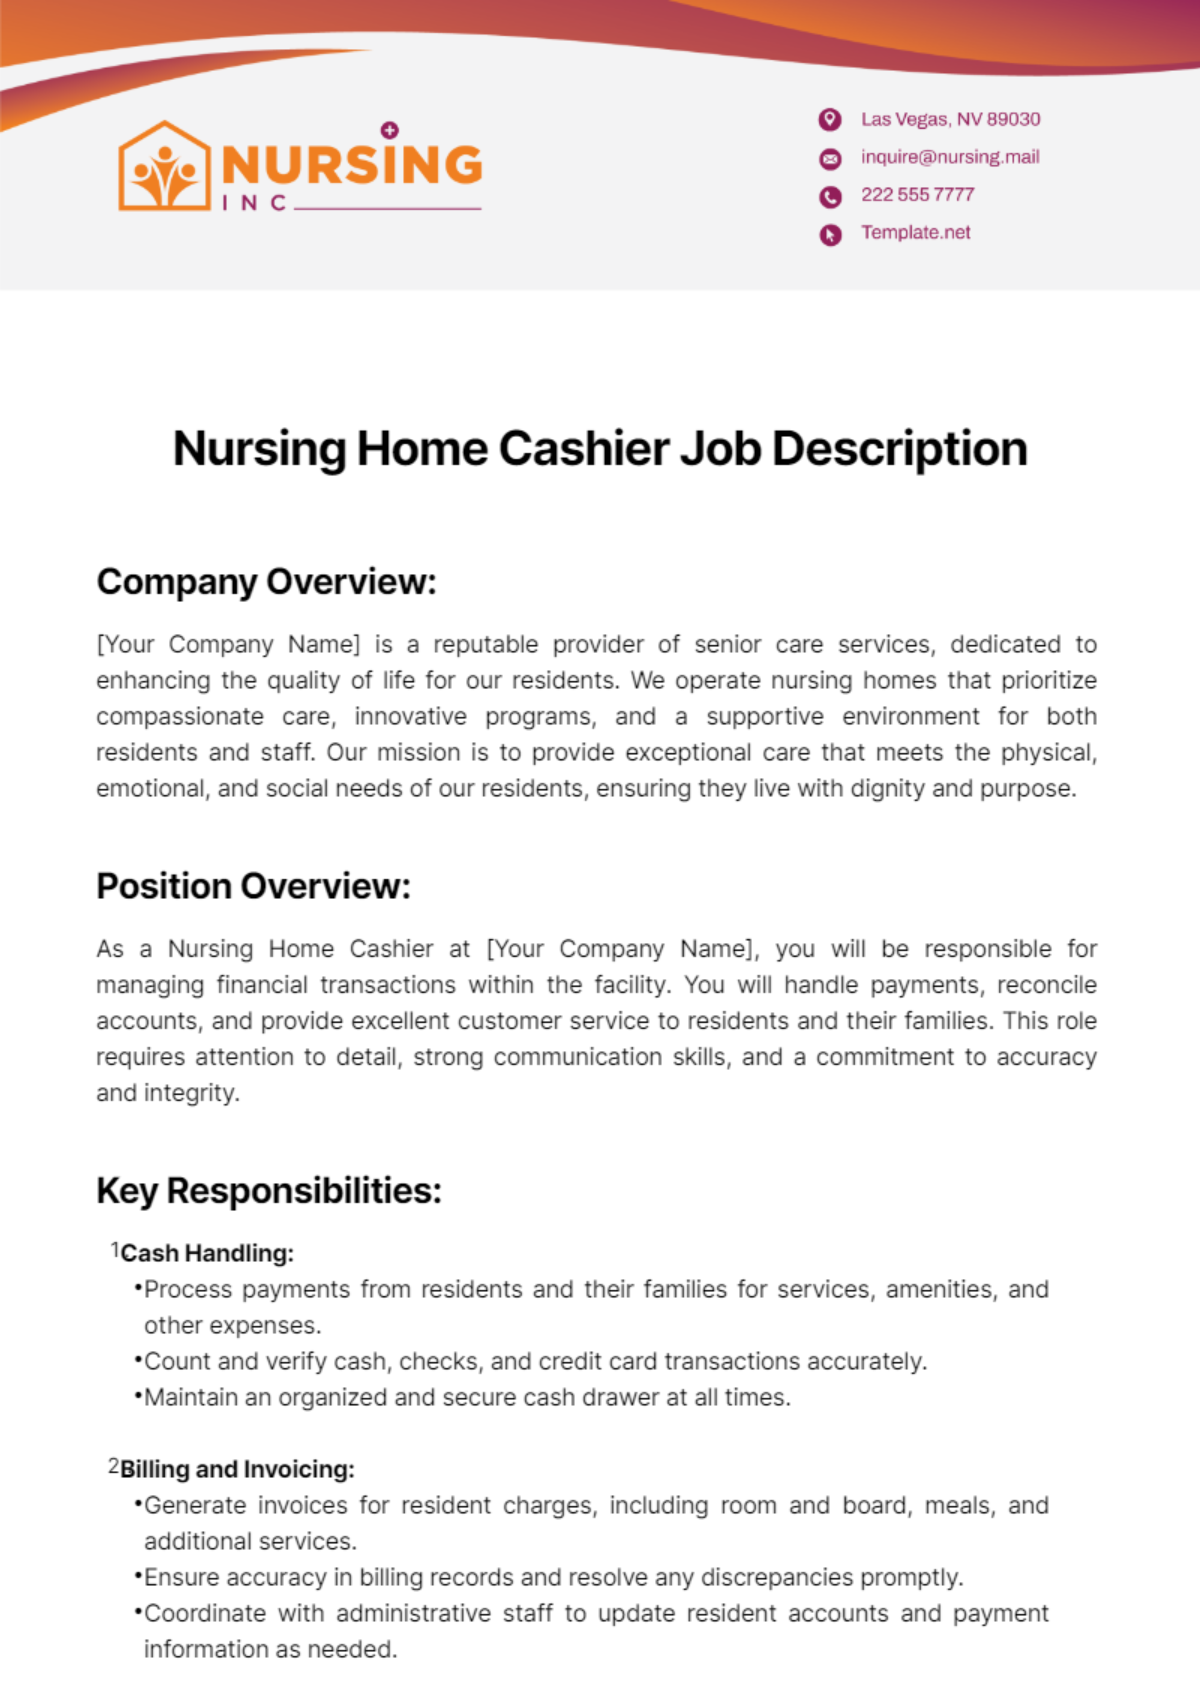 Nursing Home Cashier Job Description Template